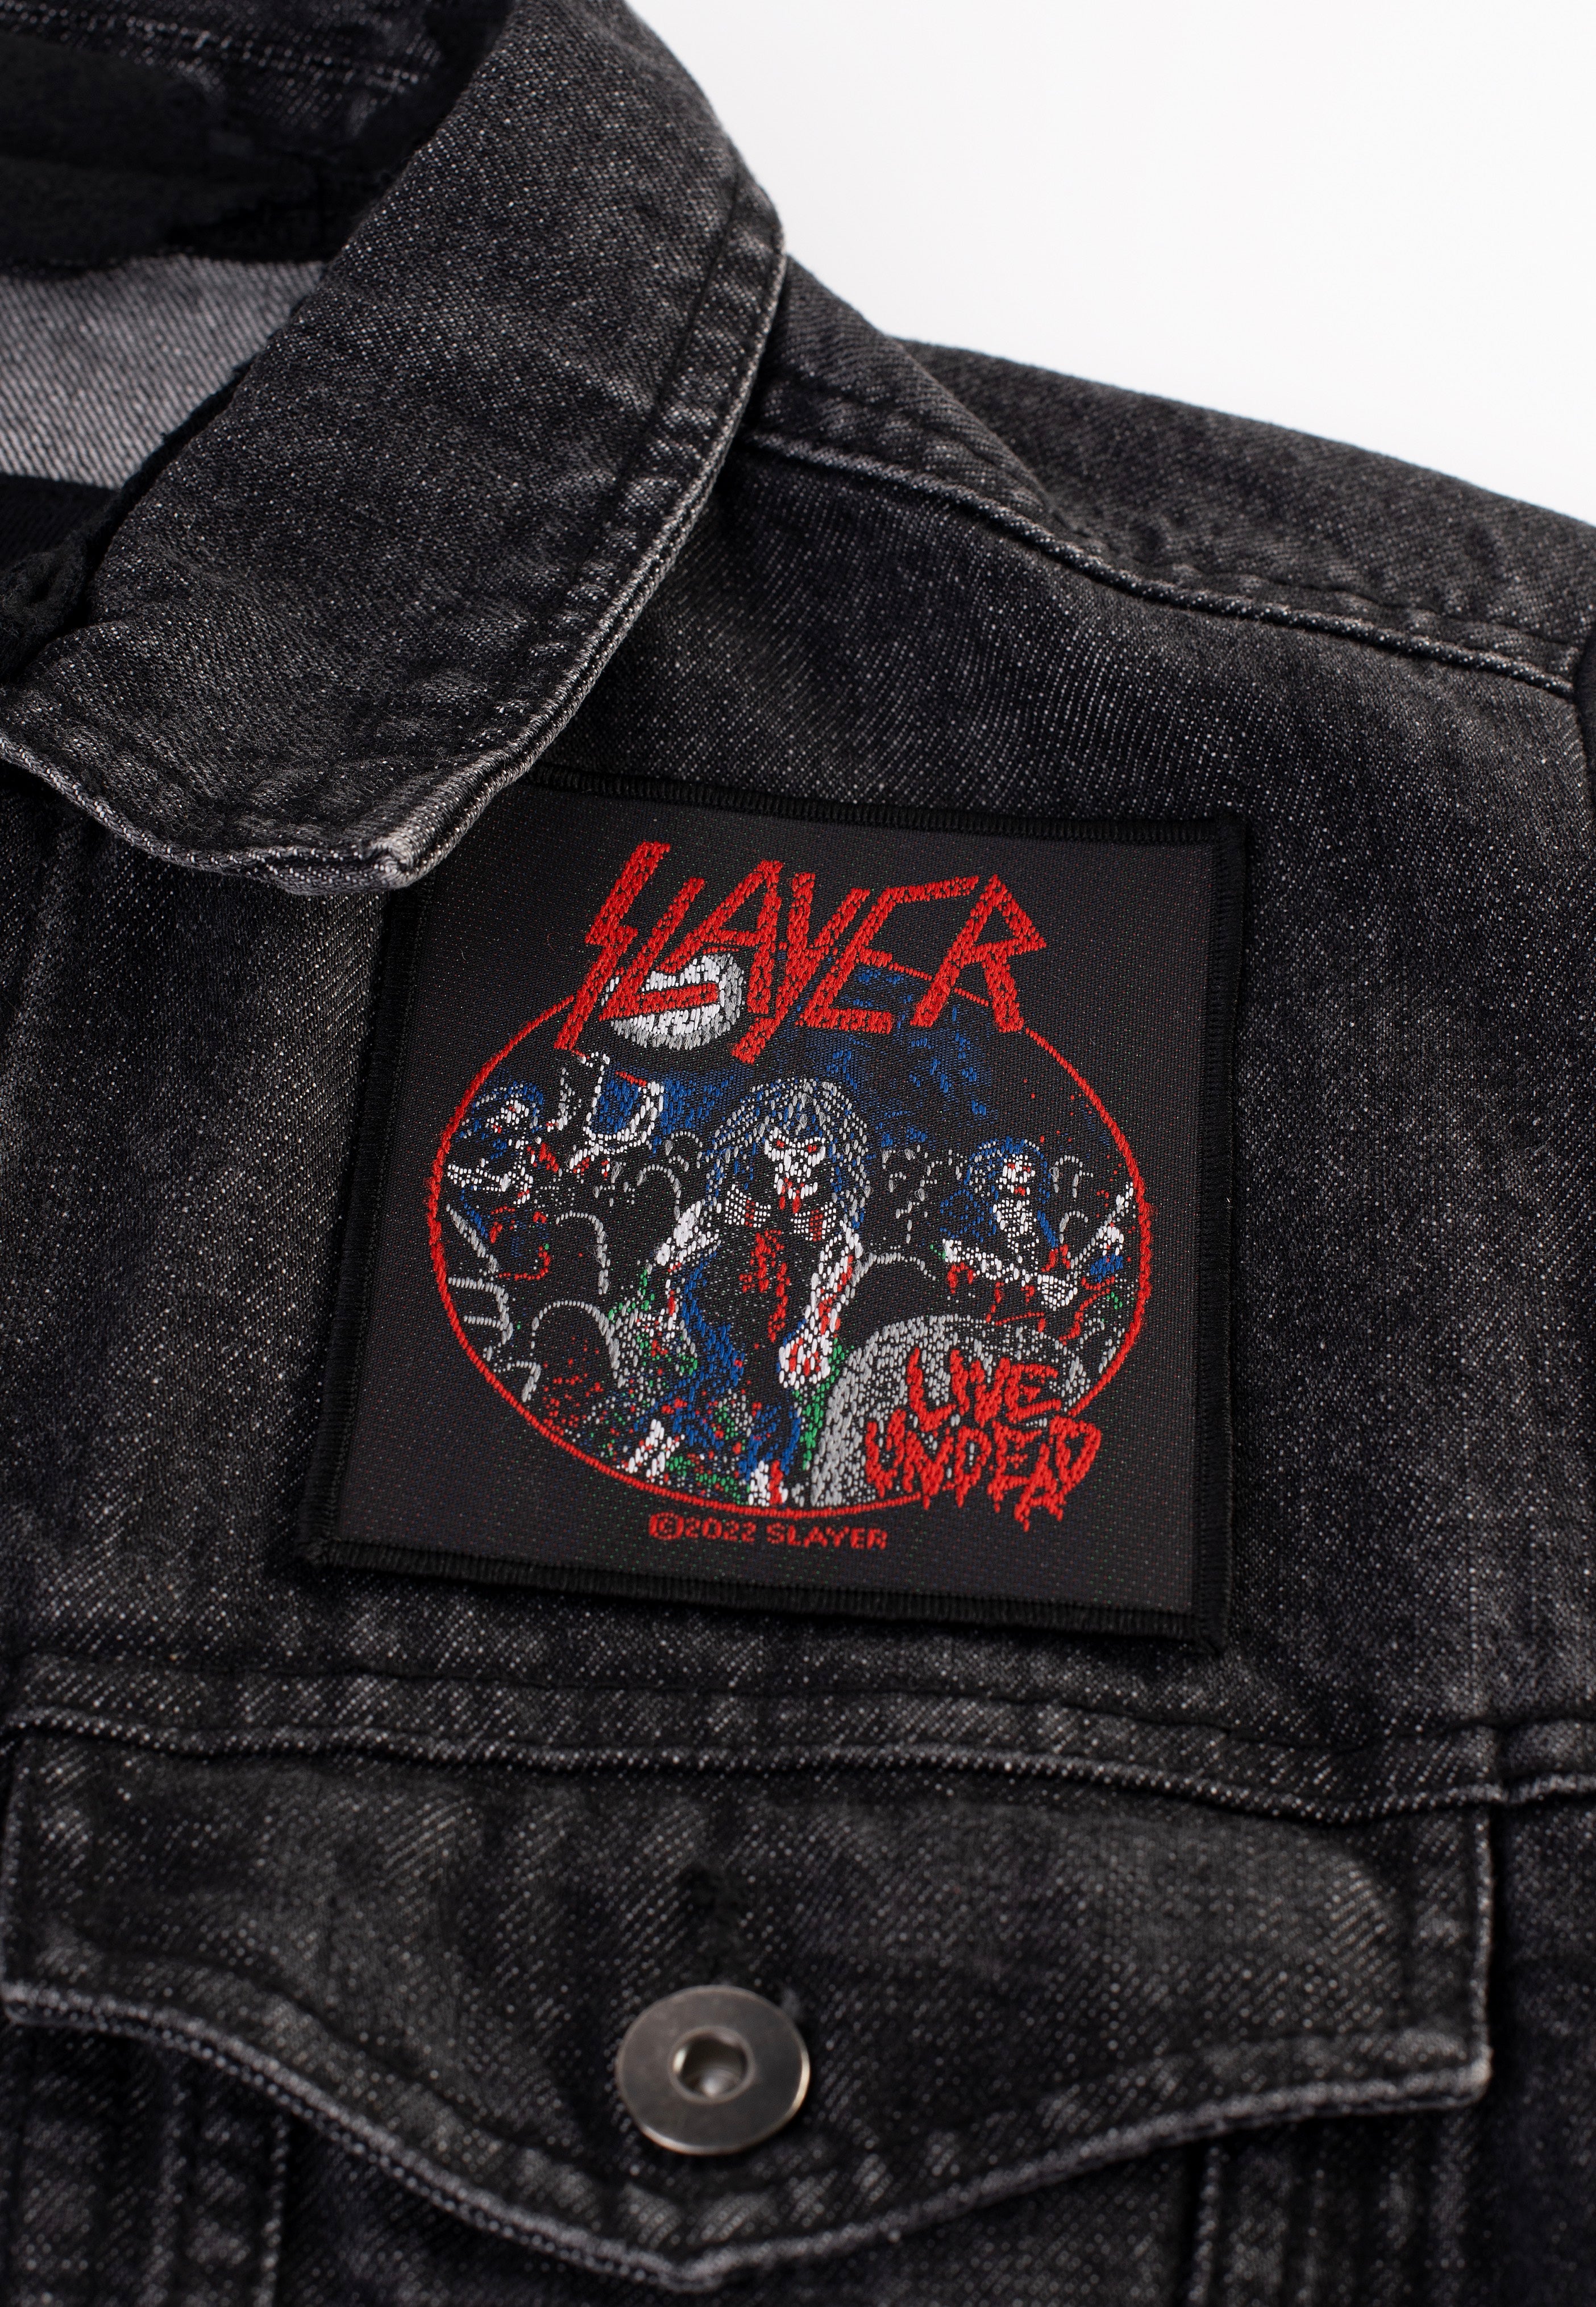 Slayer - Live Undead - Patch